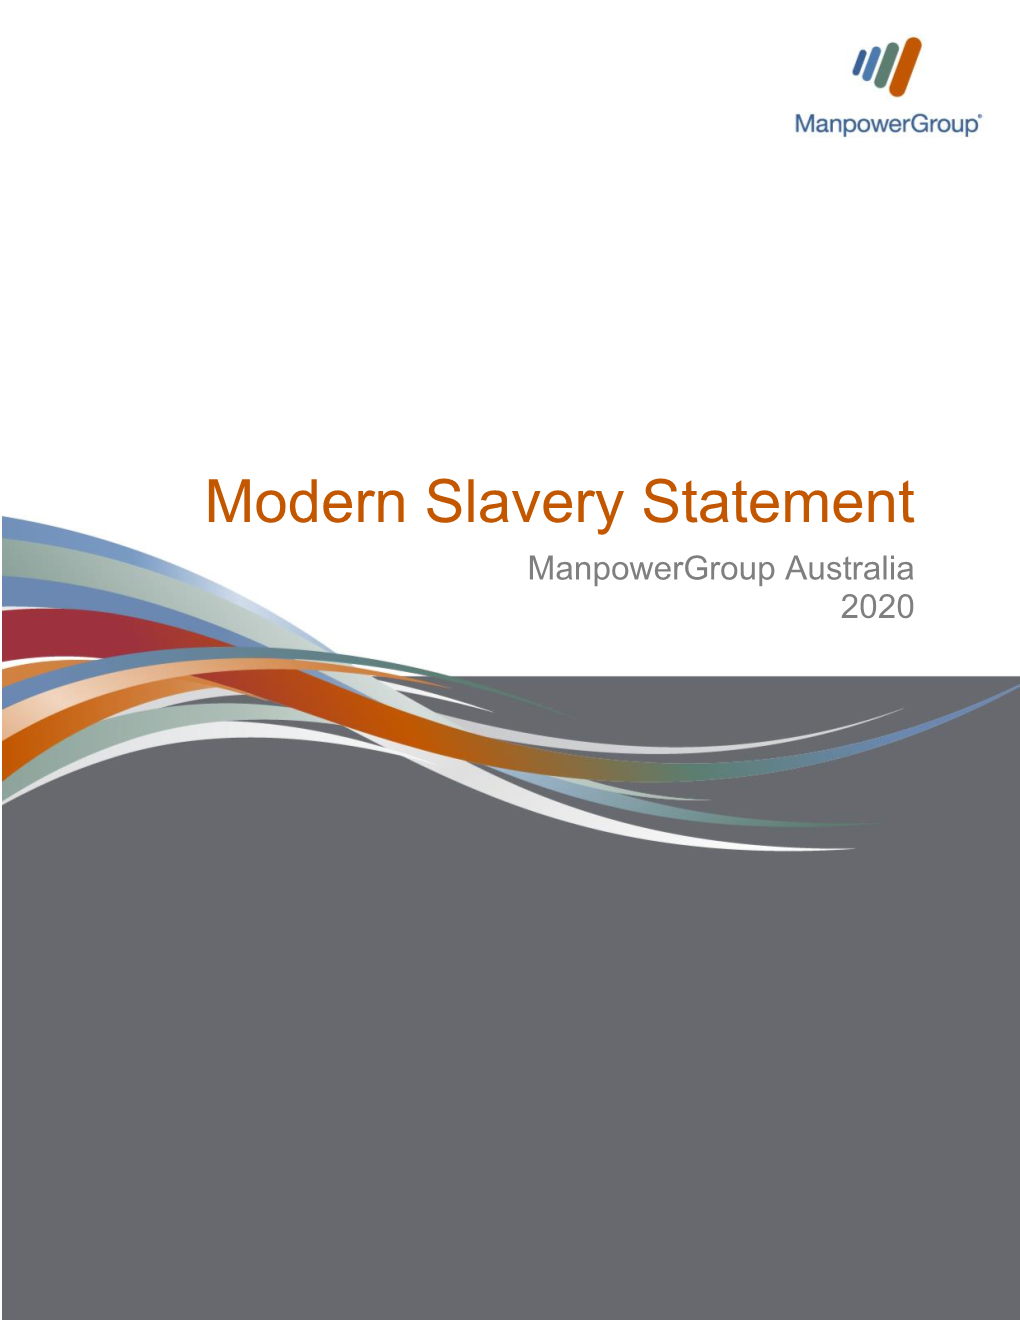 Modern Slavery Statements Register